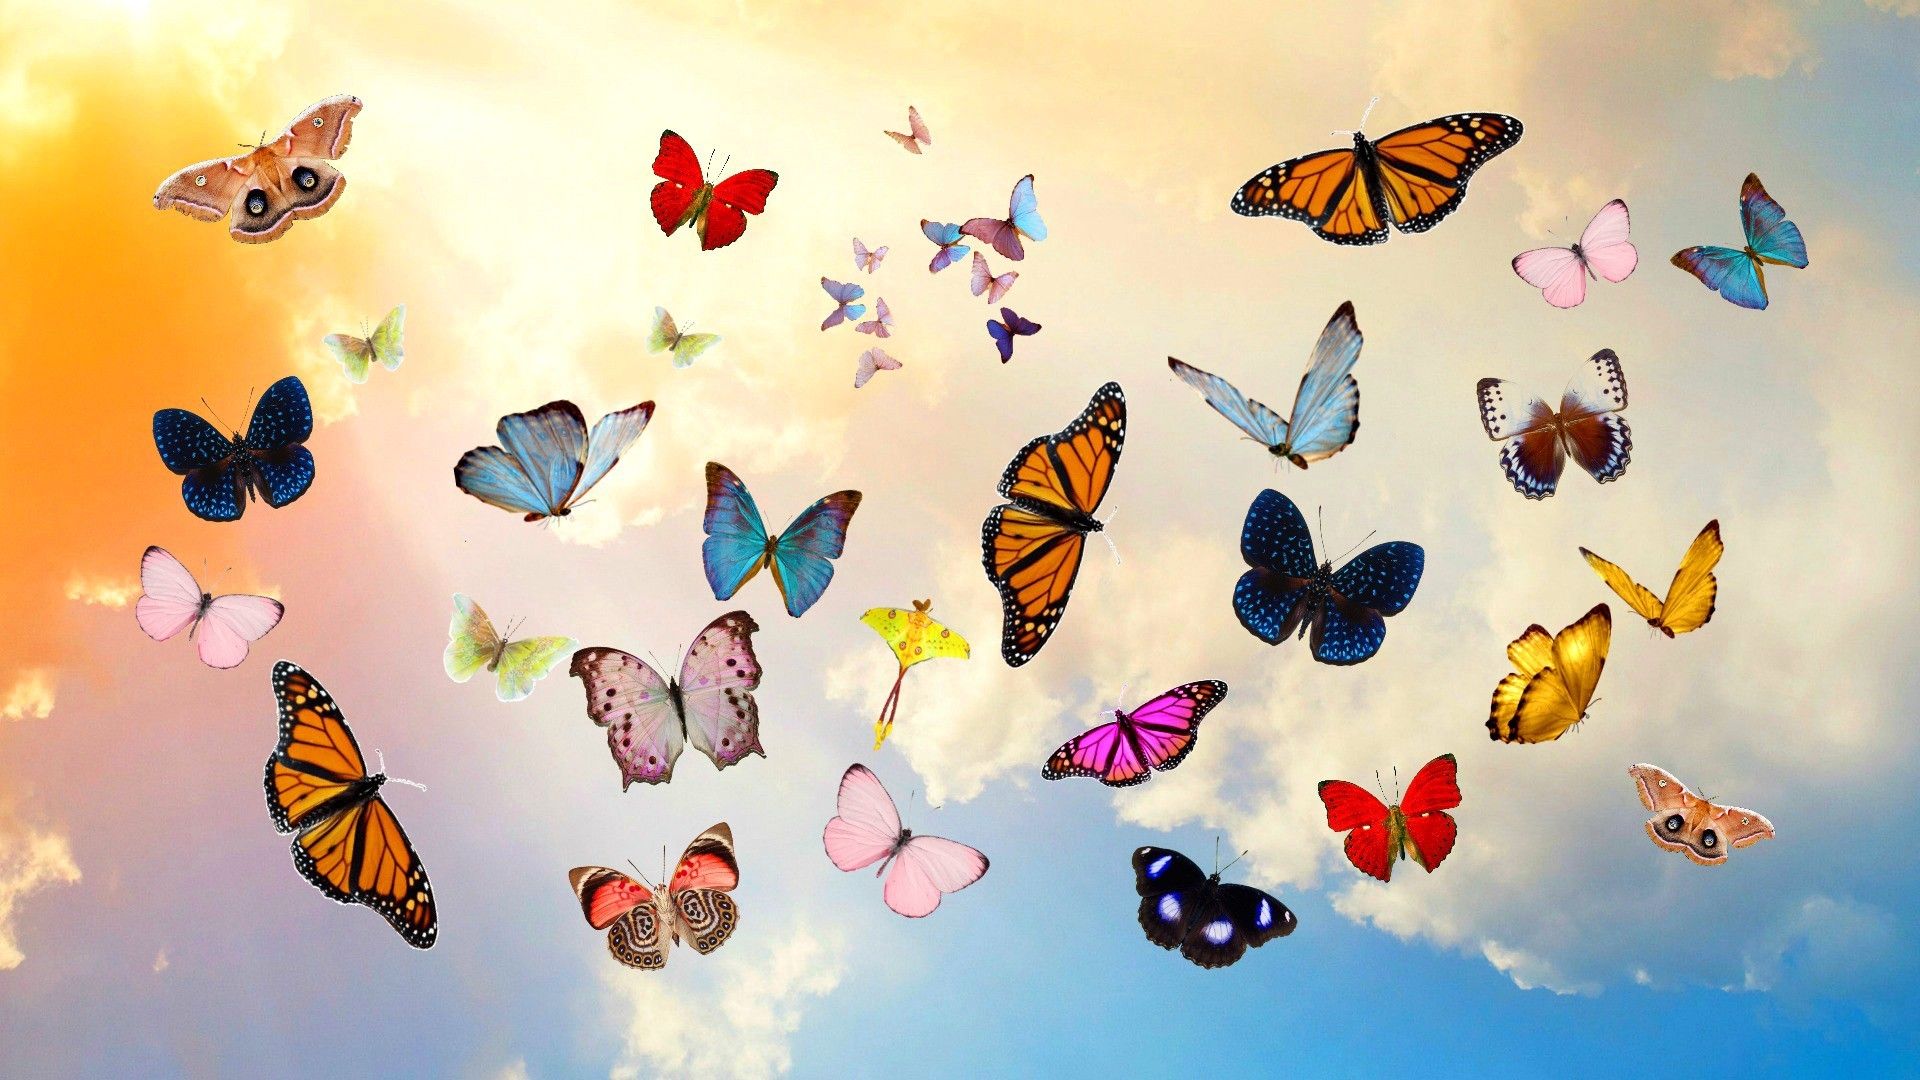 Aesthetic Butterfly Desktop Wallpapers - Wallpaper Cave